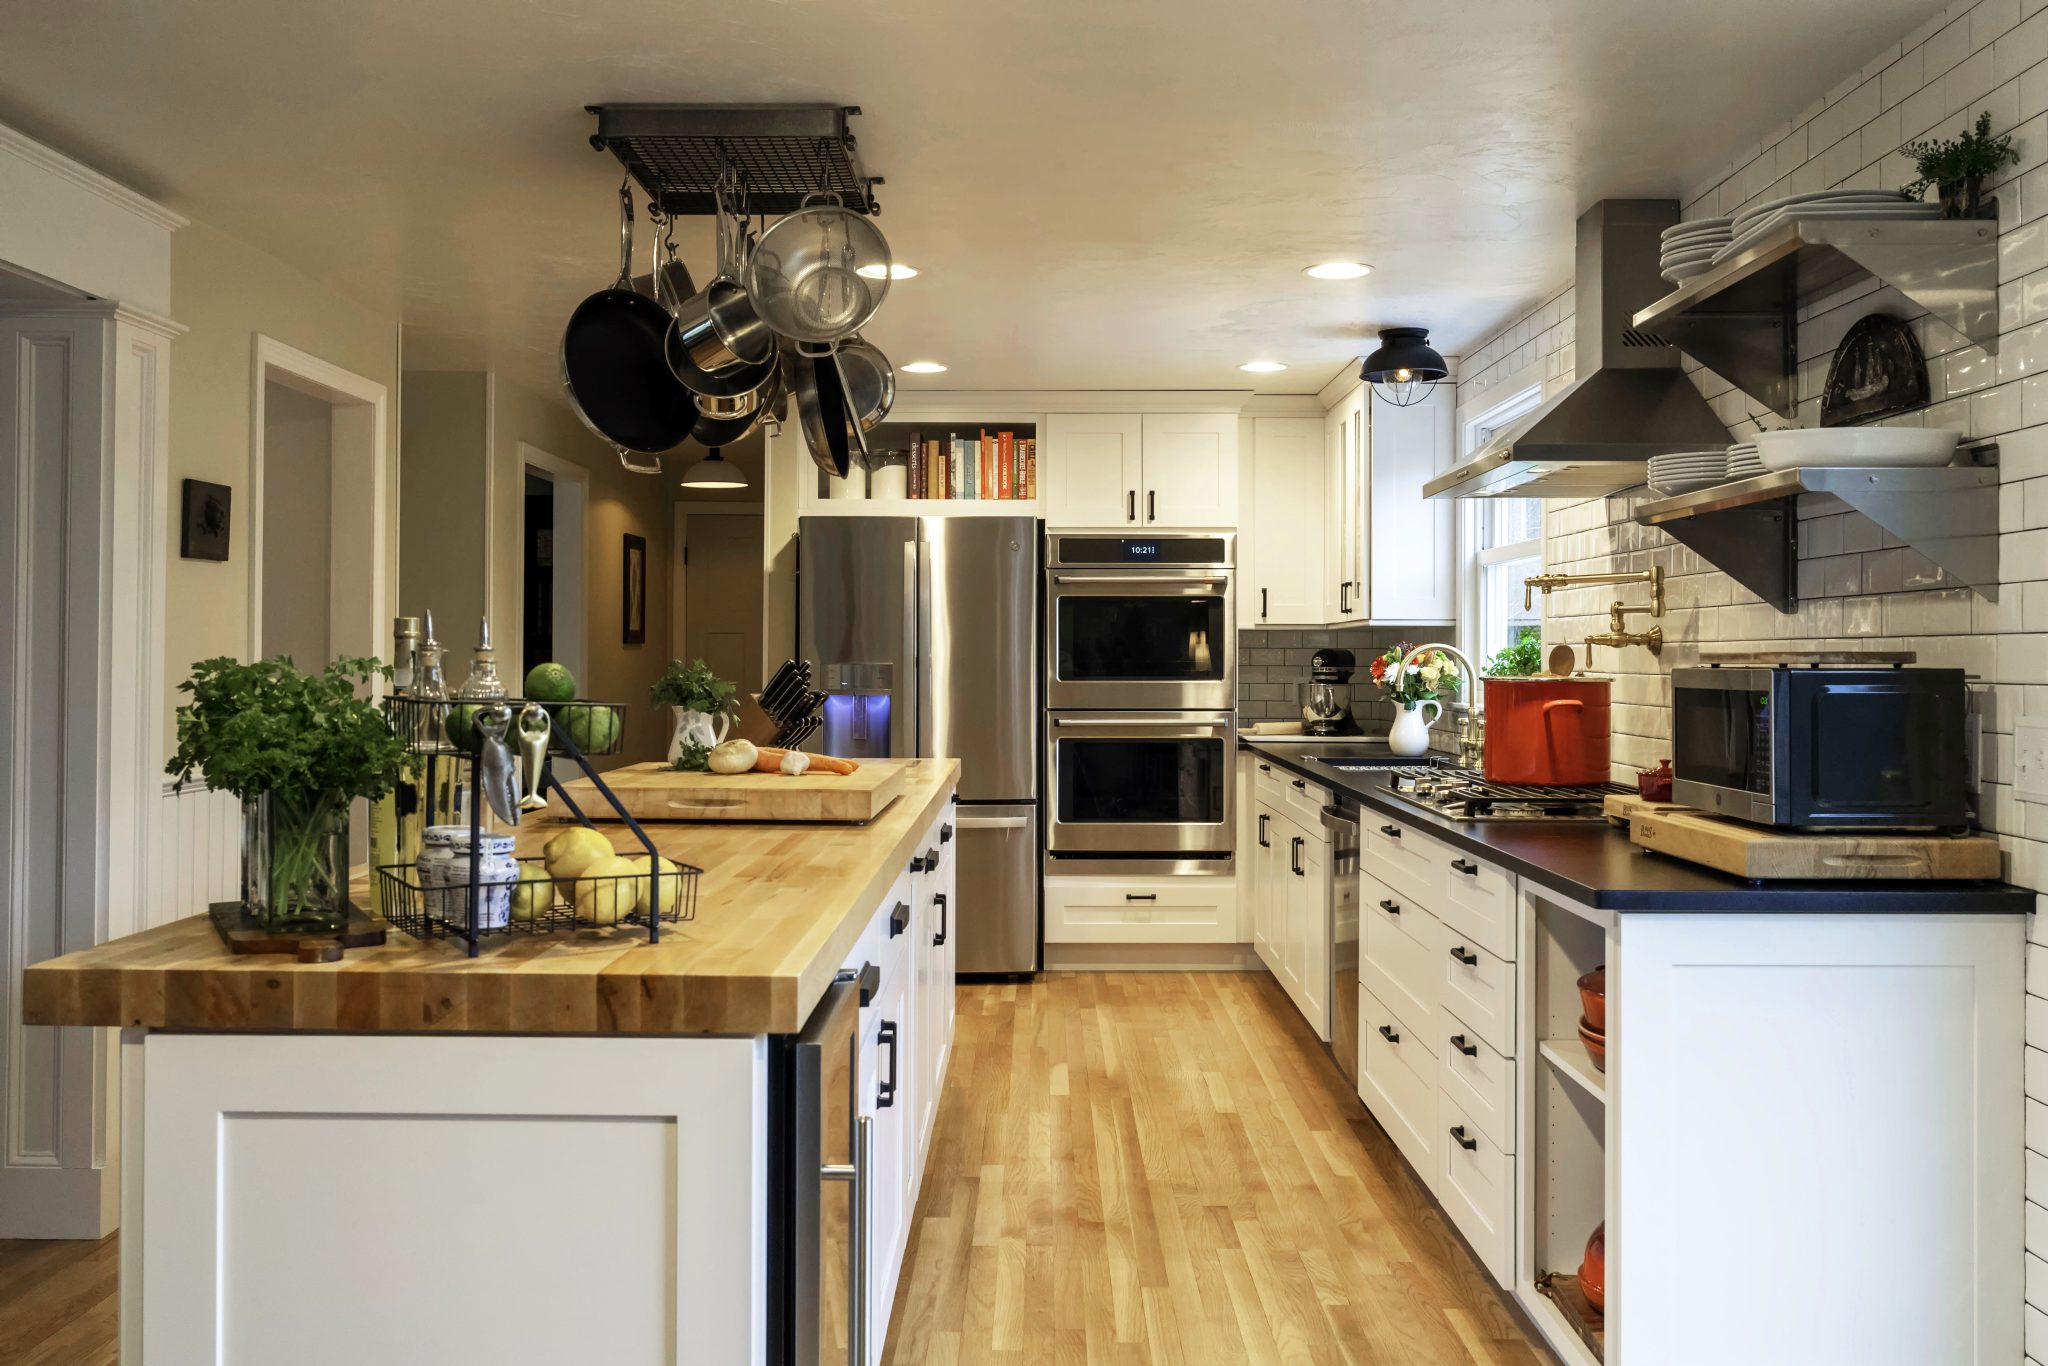 Home, Kitchen and Bathroom Design Services in Cape Cod